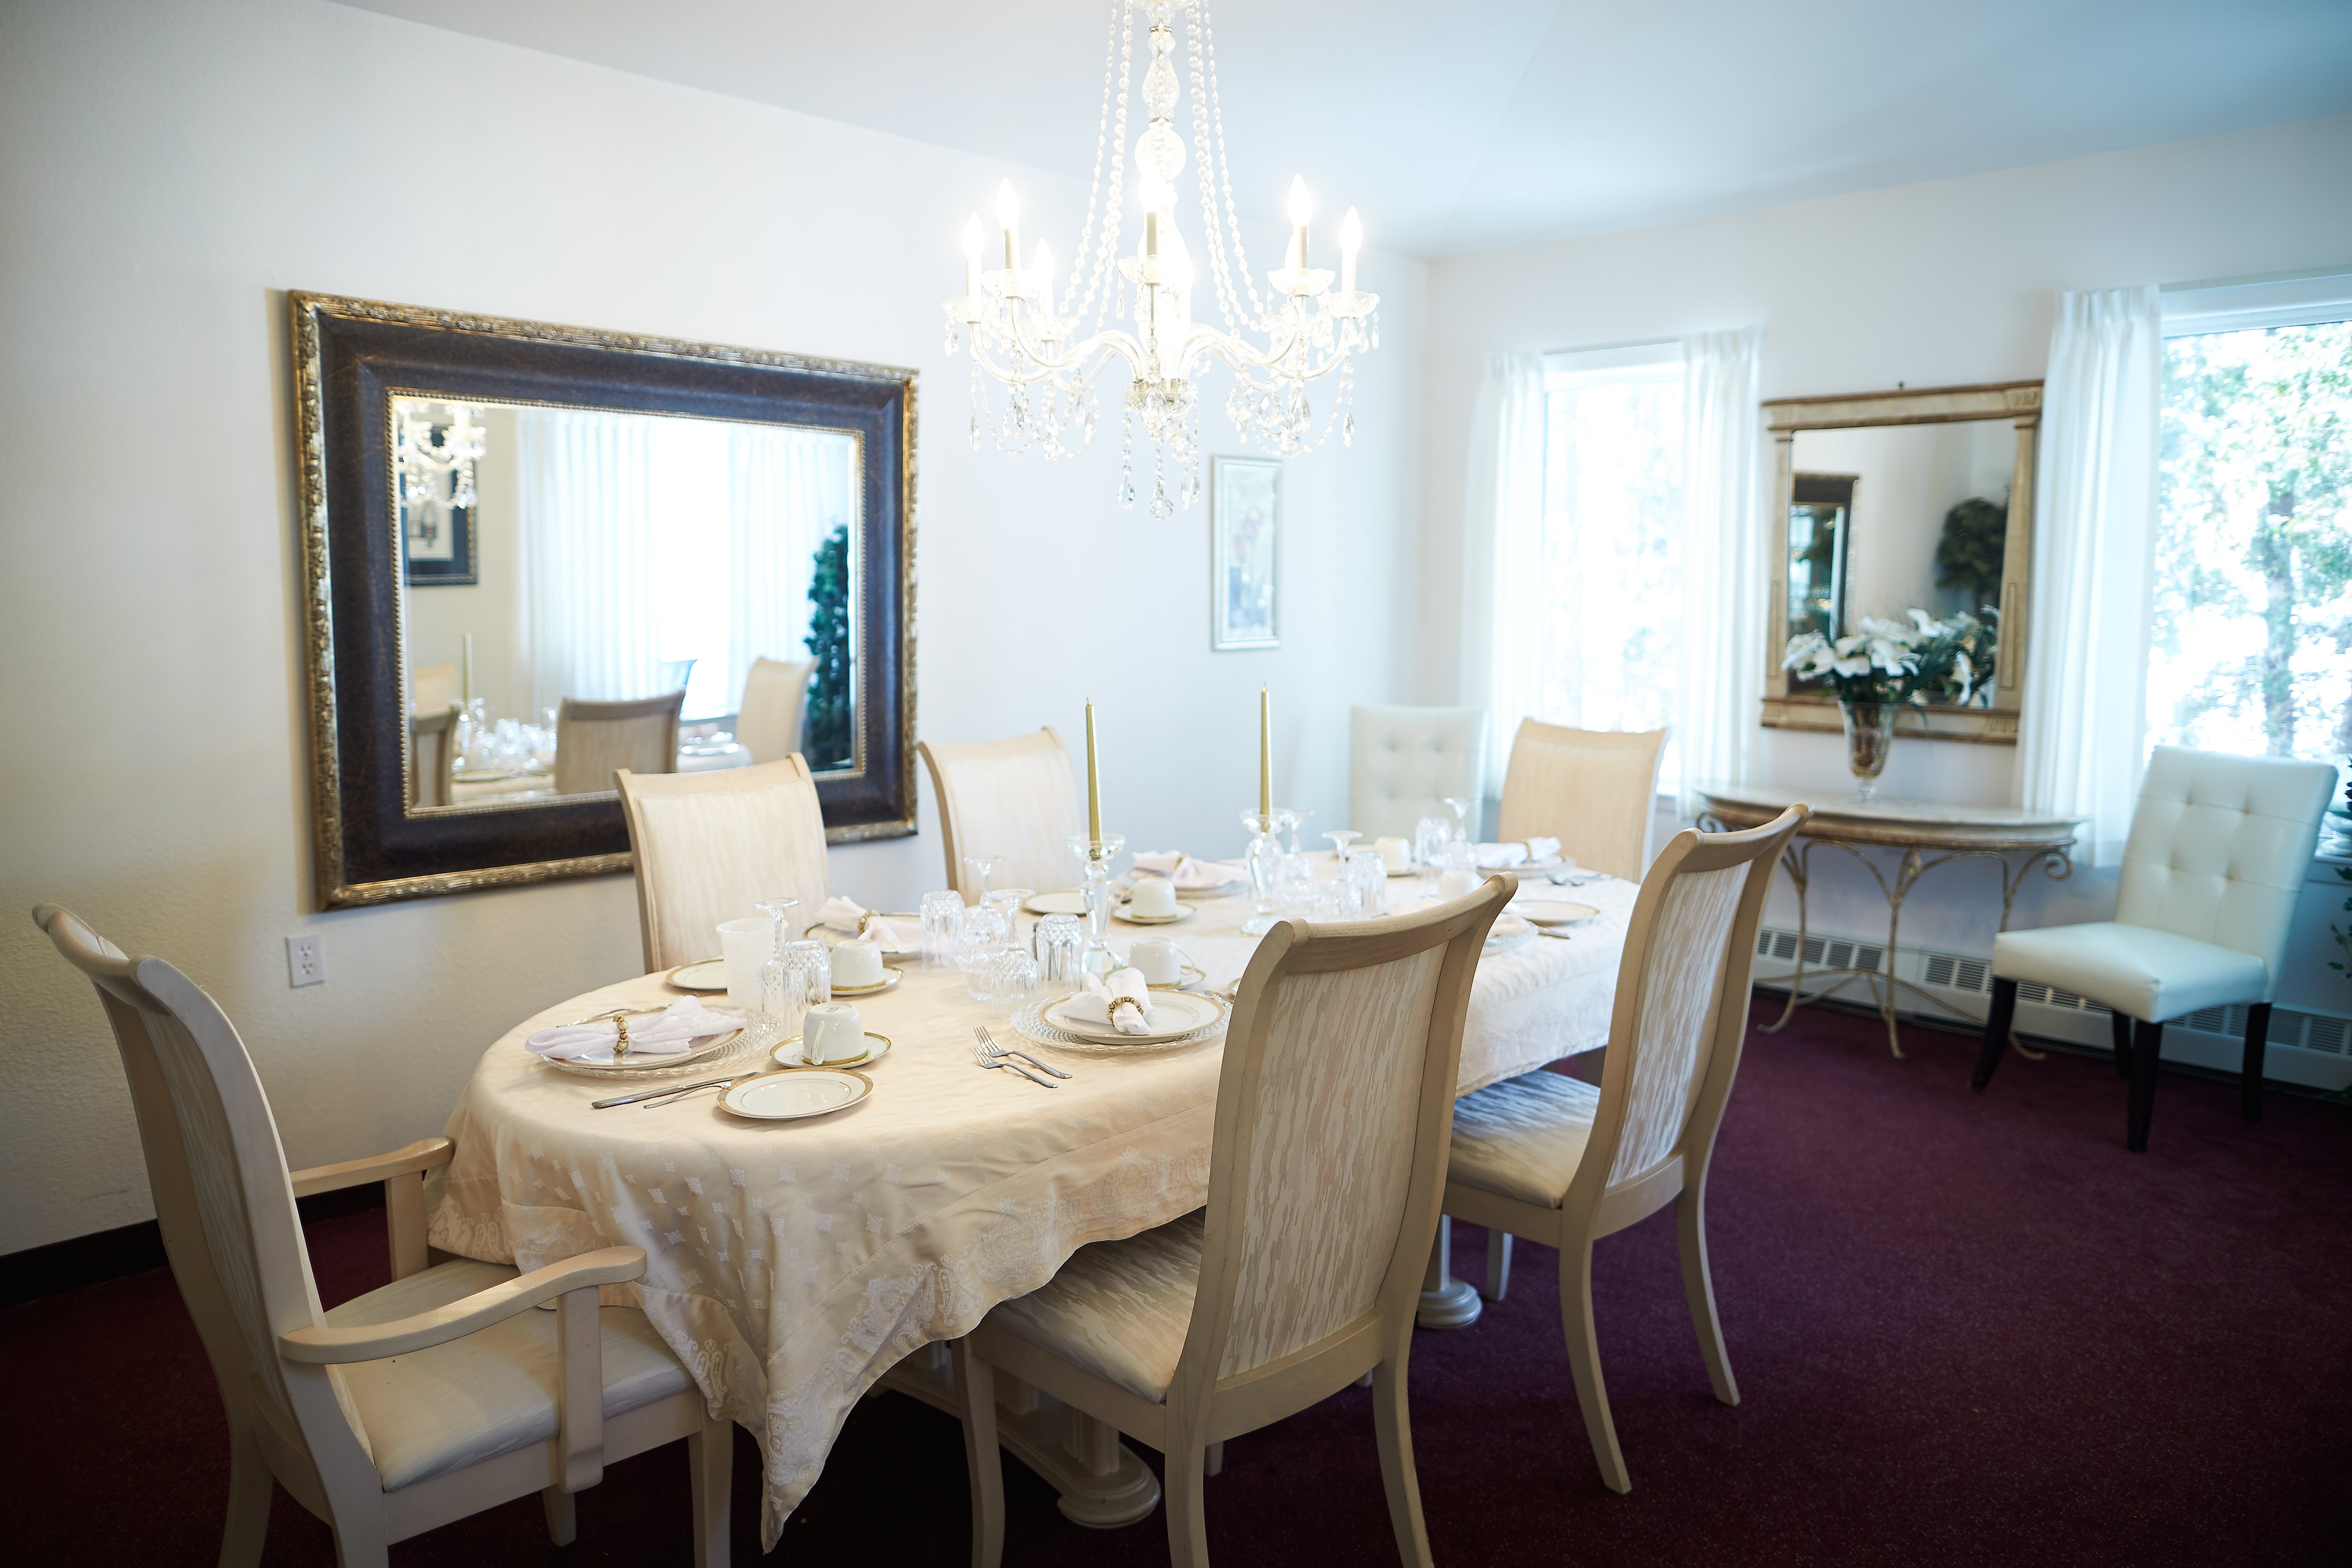 Dining area at Kensington Court Retirement Residence in Windsor